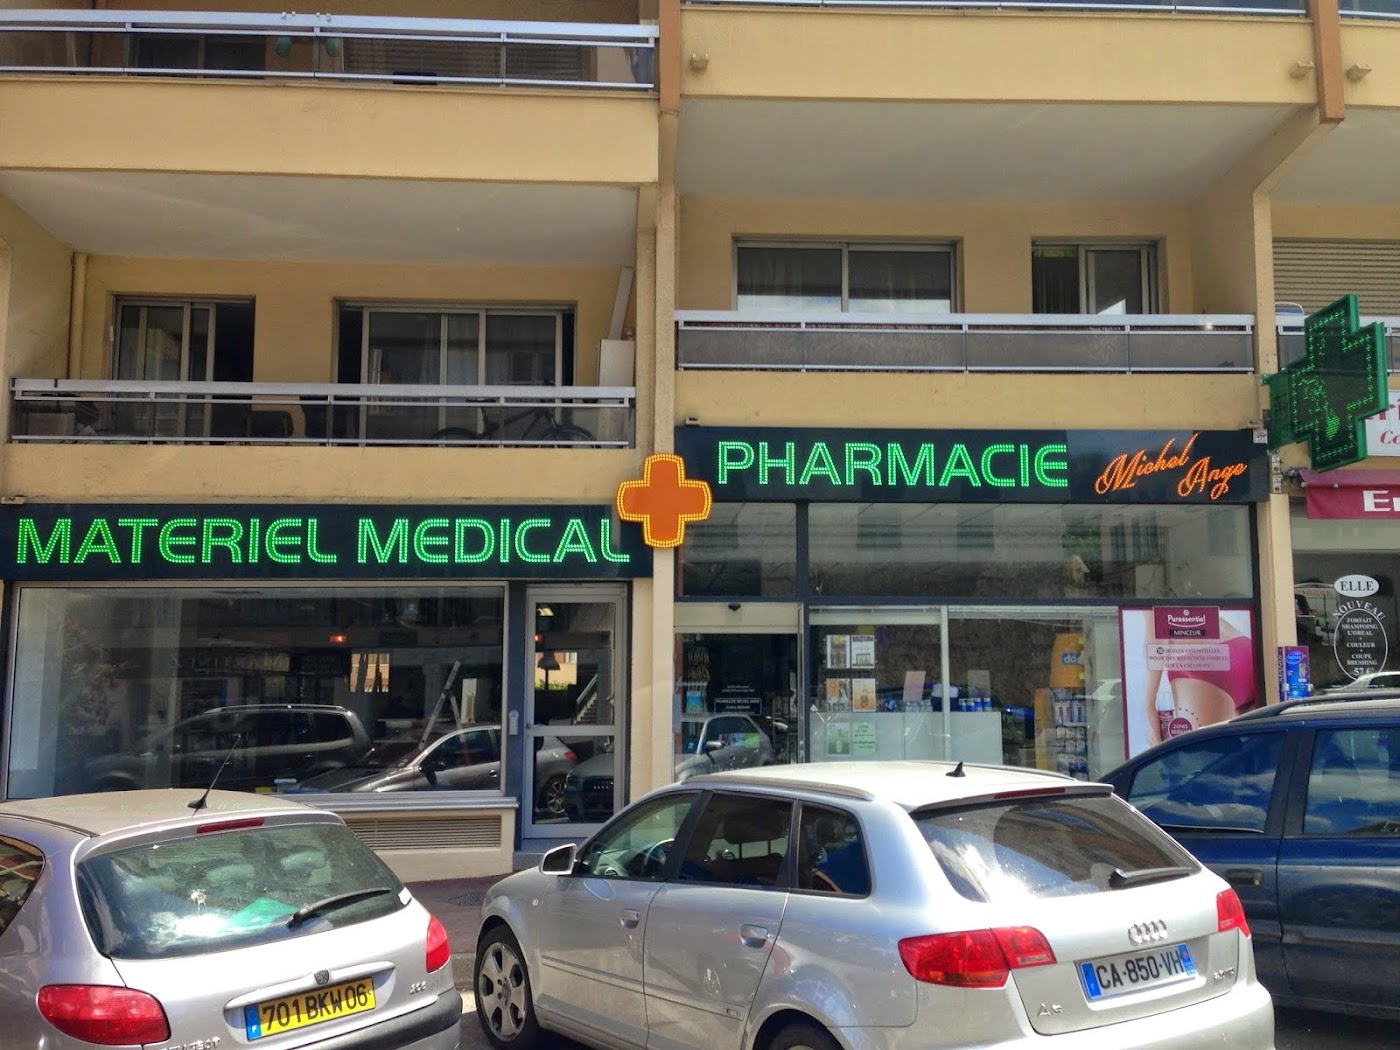 Pharmacie Michel Ange